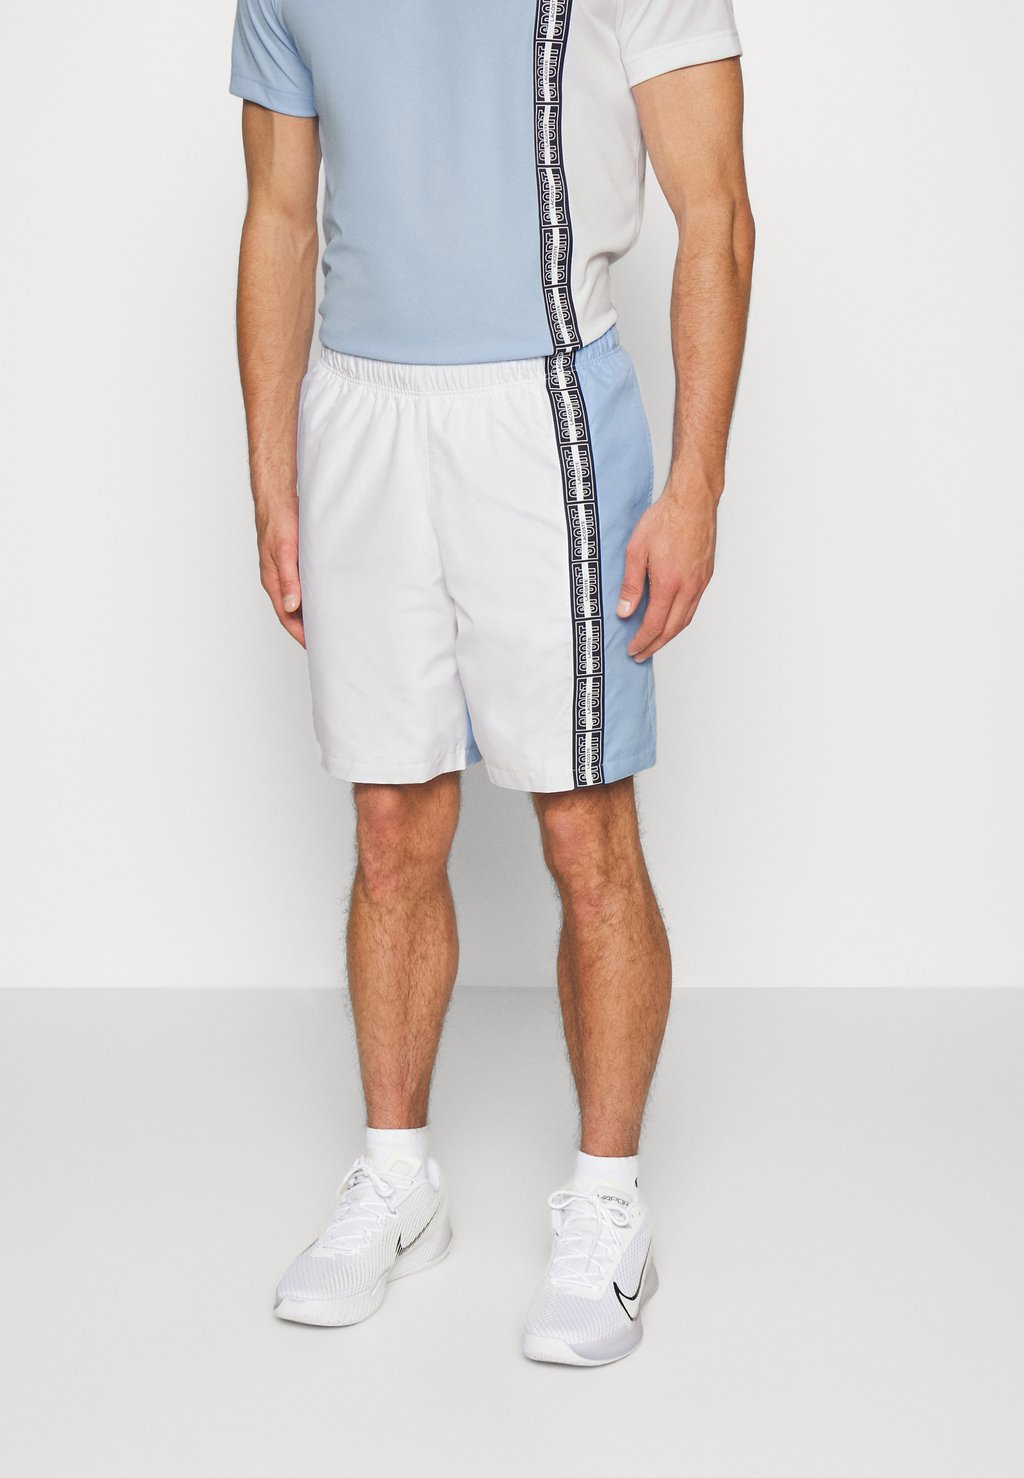 Спортивные шорты Tennis Lacoste, цвет white/navy blue спортивные шорты tennis lacoste цвет white navy blue